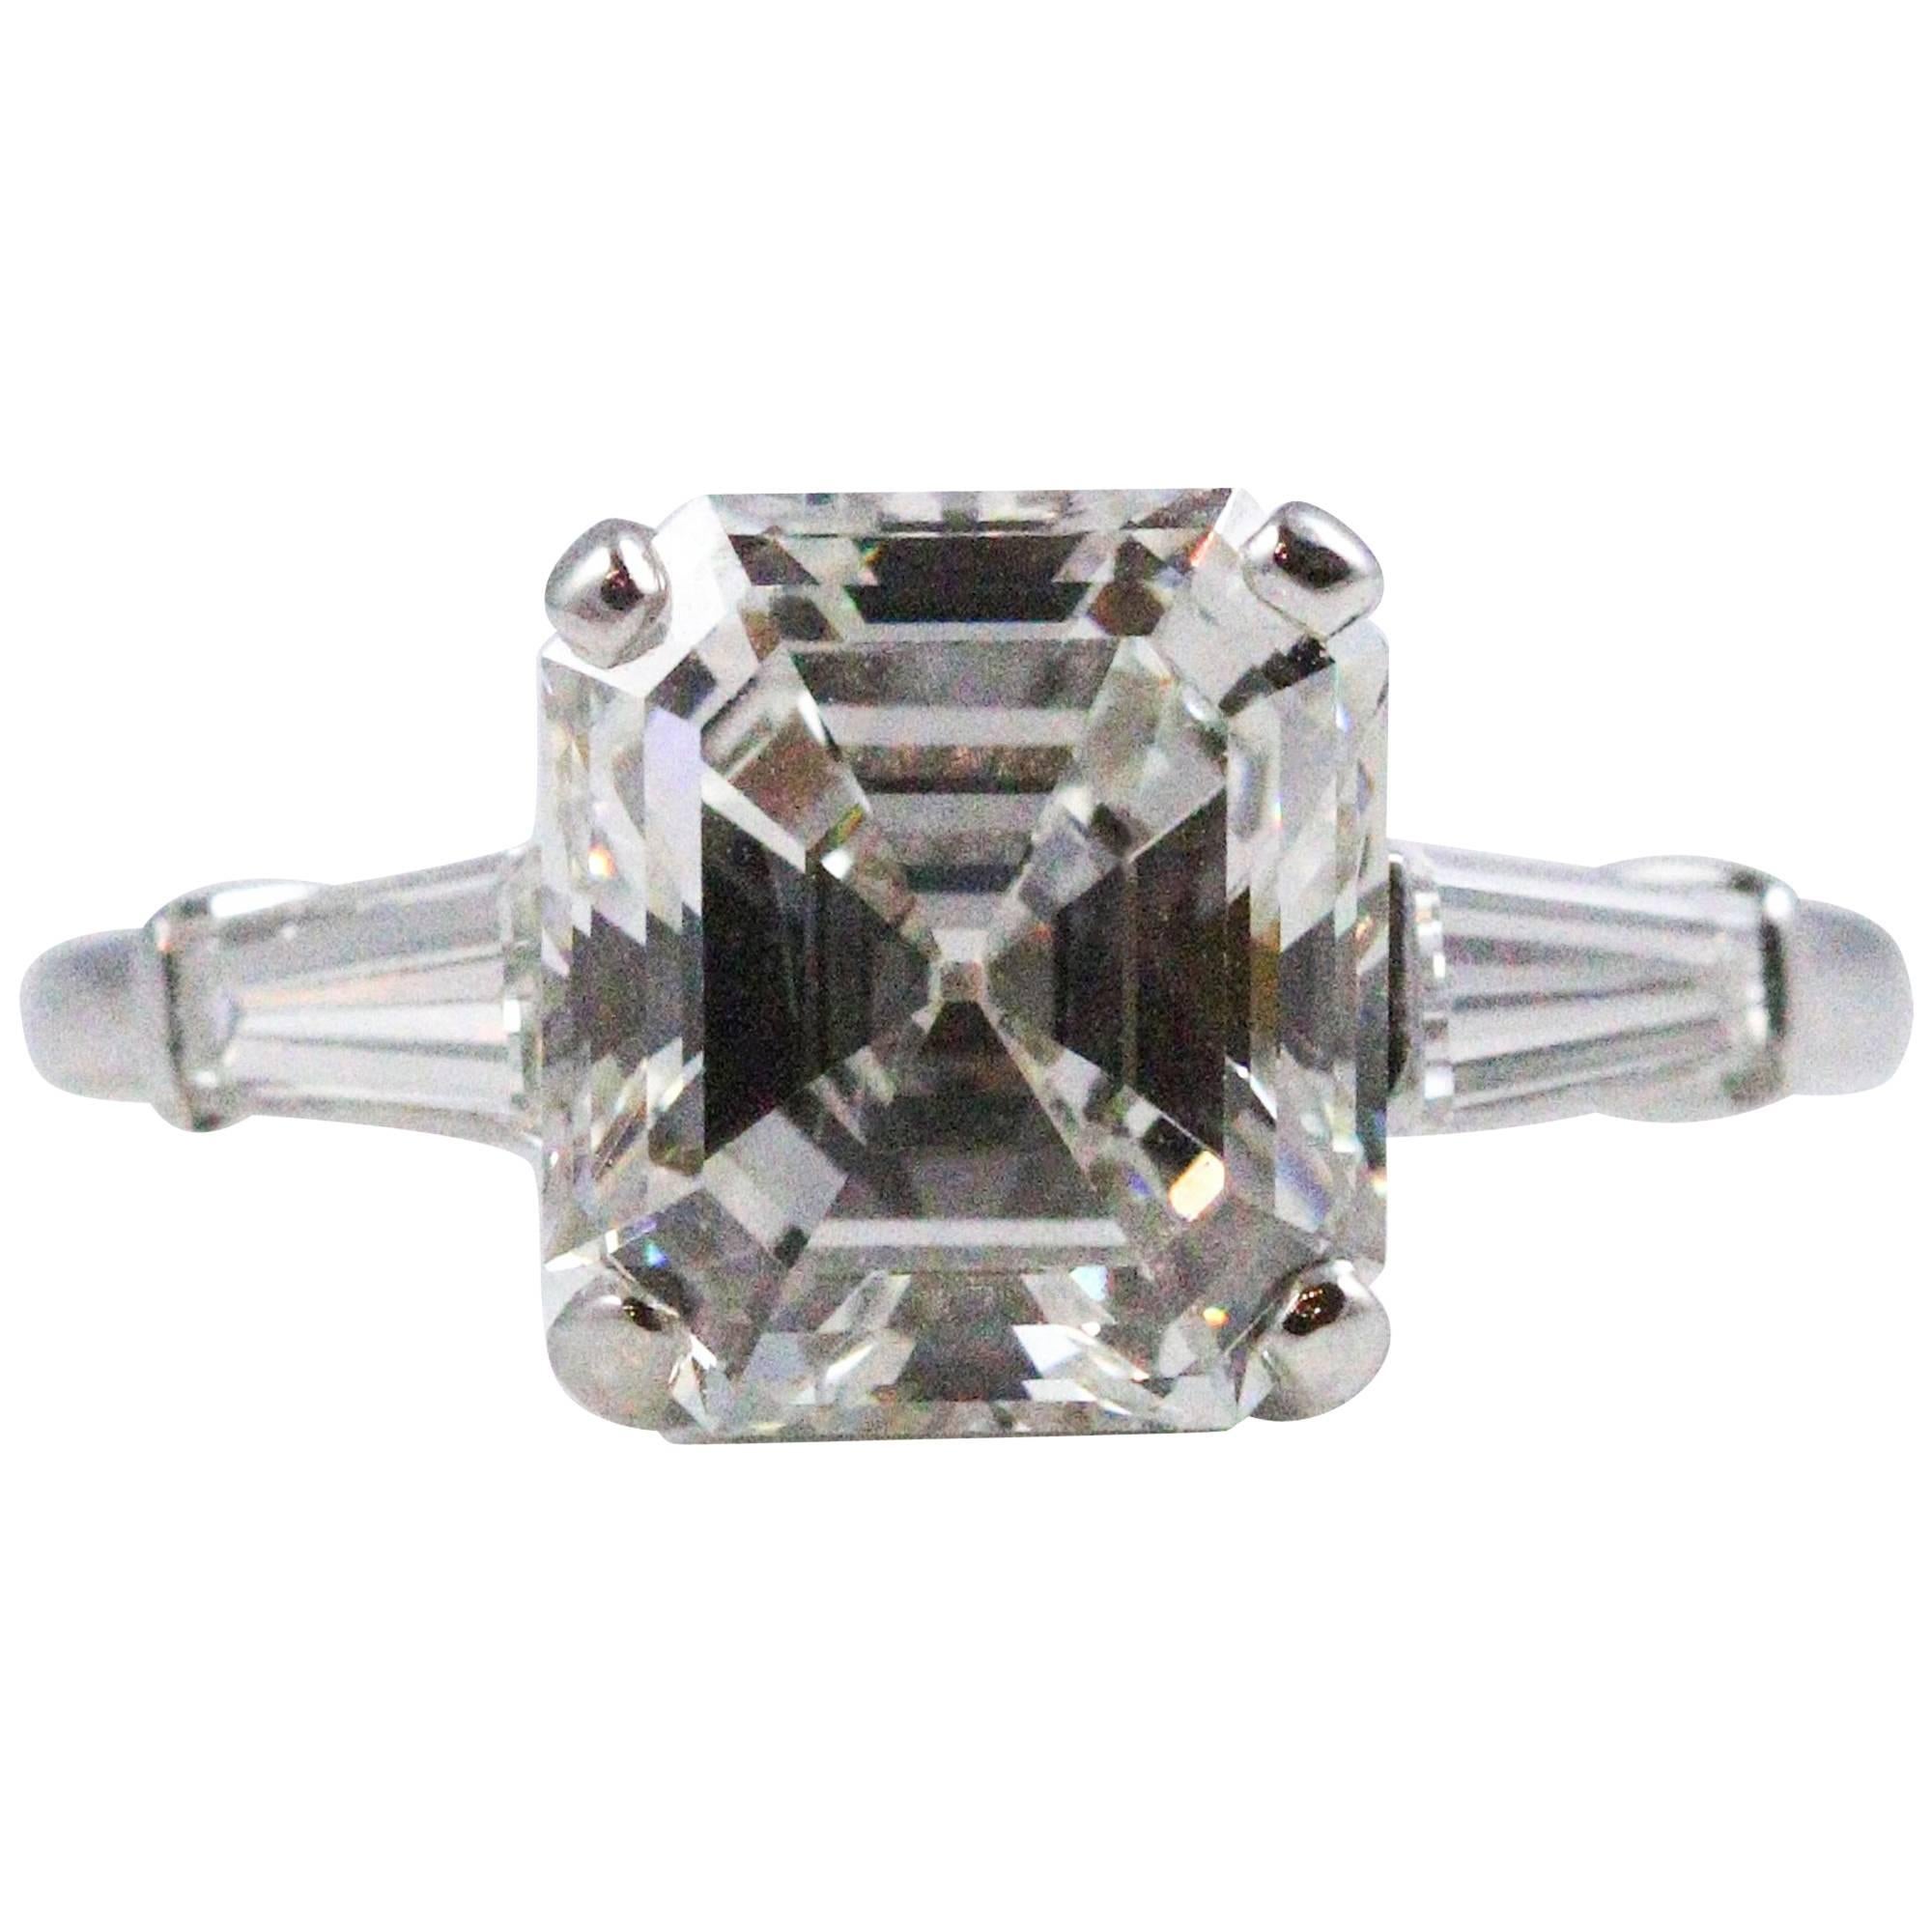 Magnificent 3.87 Carat GIA Certified Emerald Cut Diamond Ring